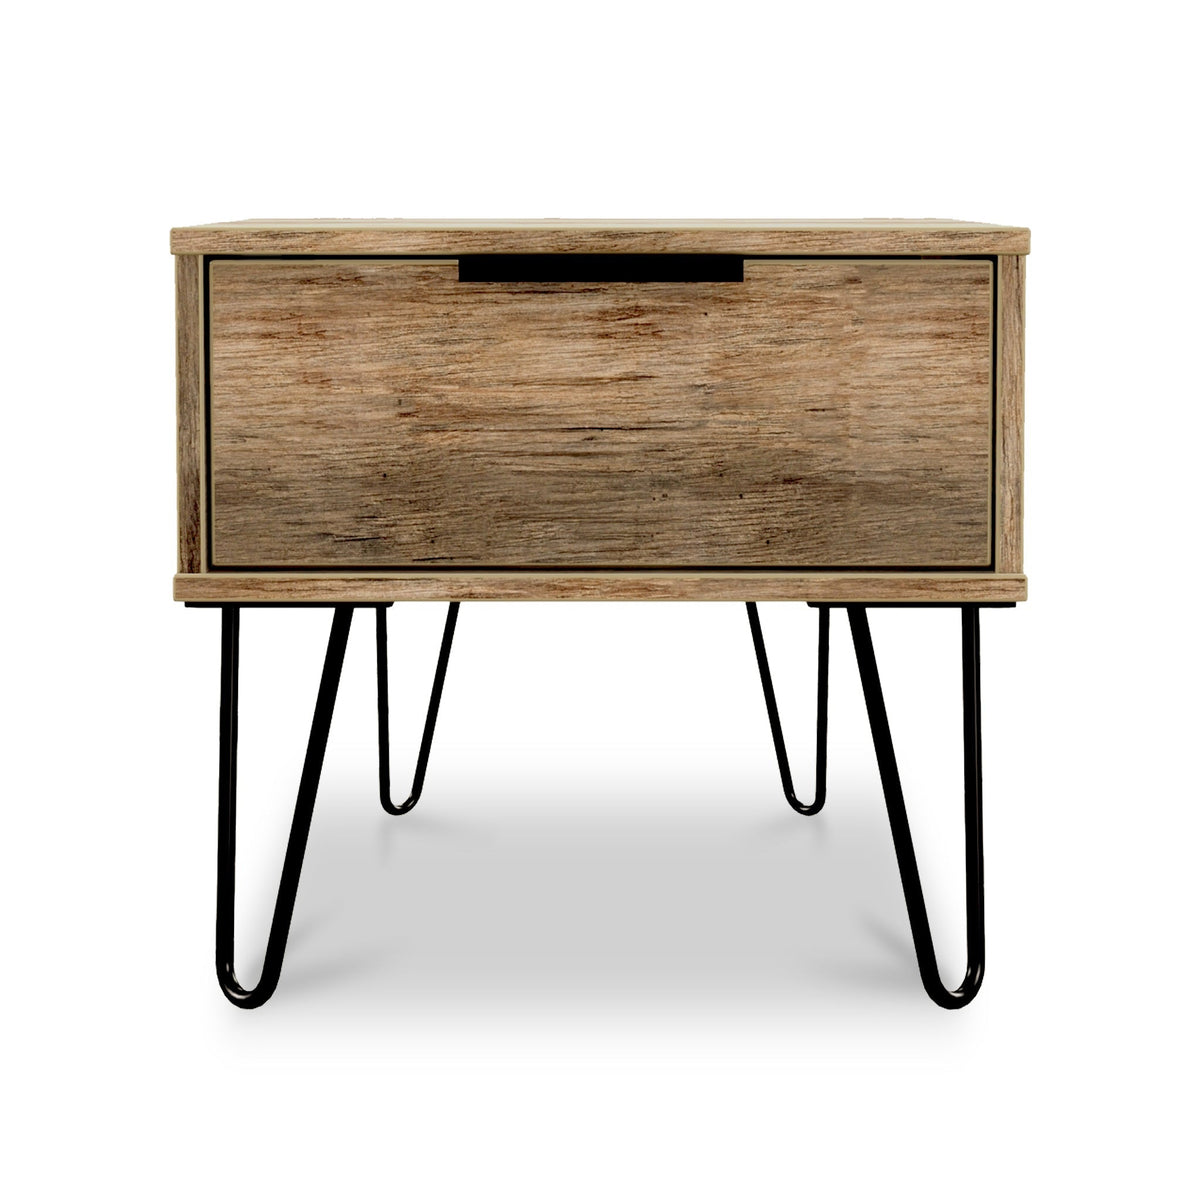 Moreno Rustic Oak 1 Drawer Bedside Table Cabinet from Roseland Furniture